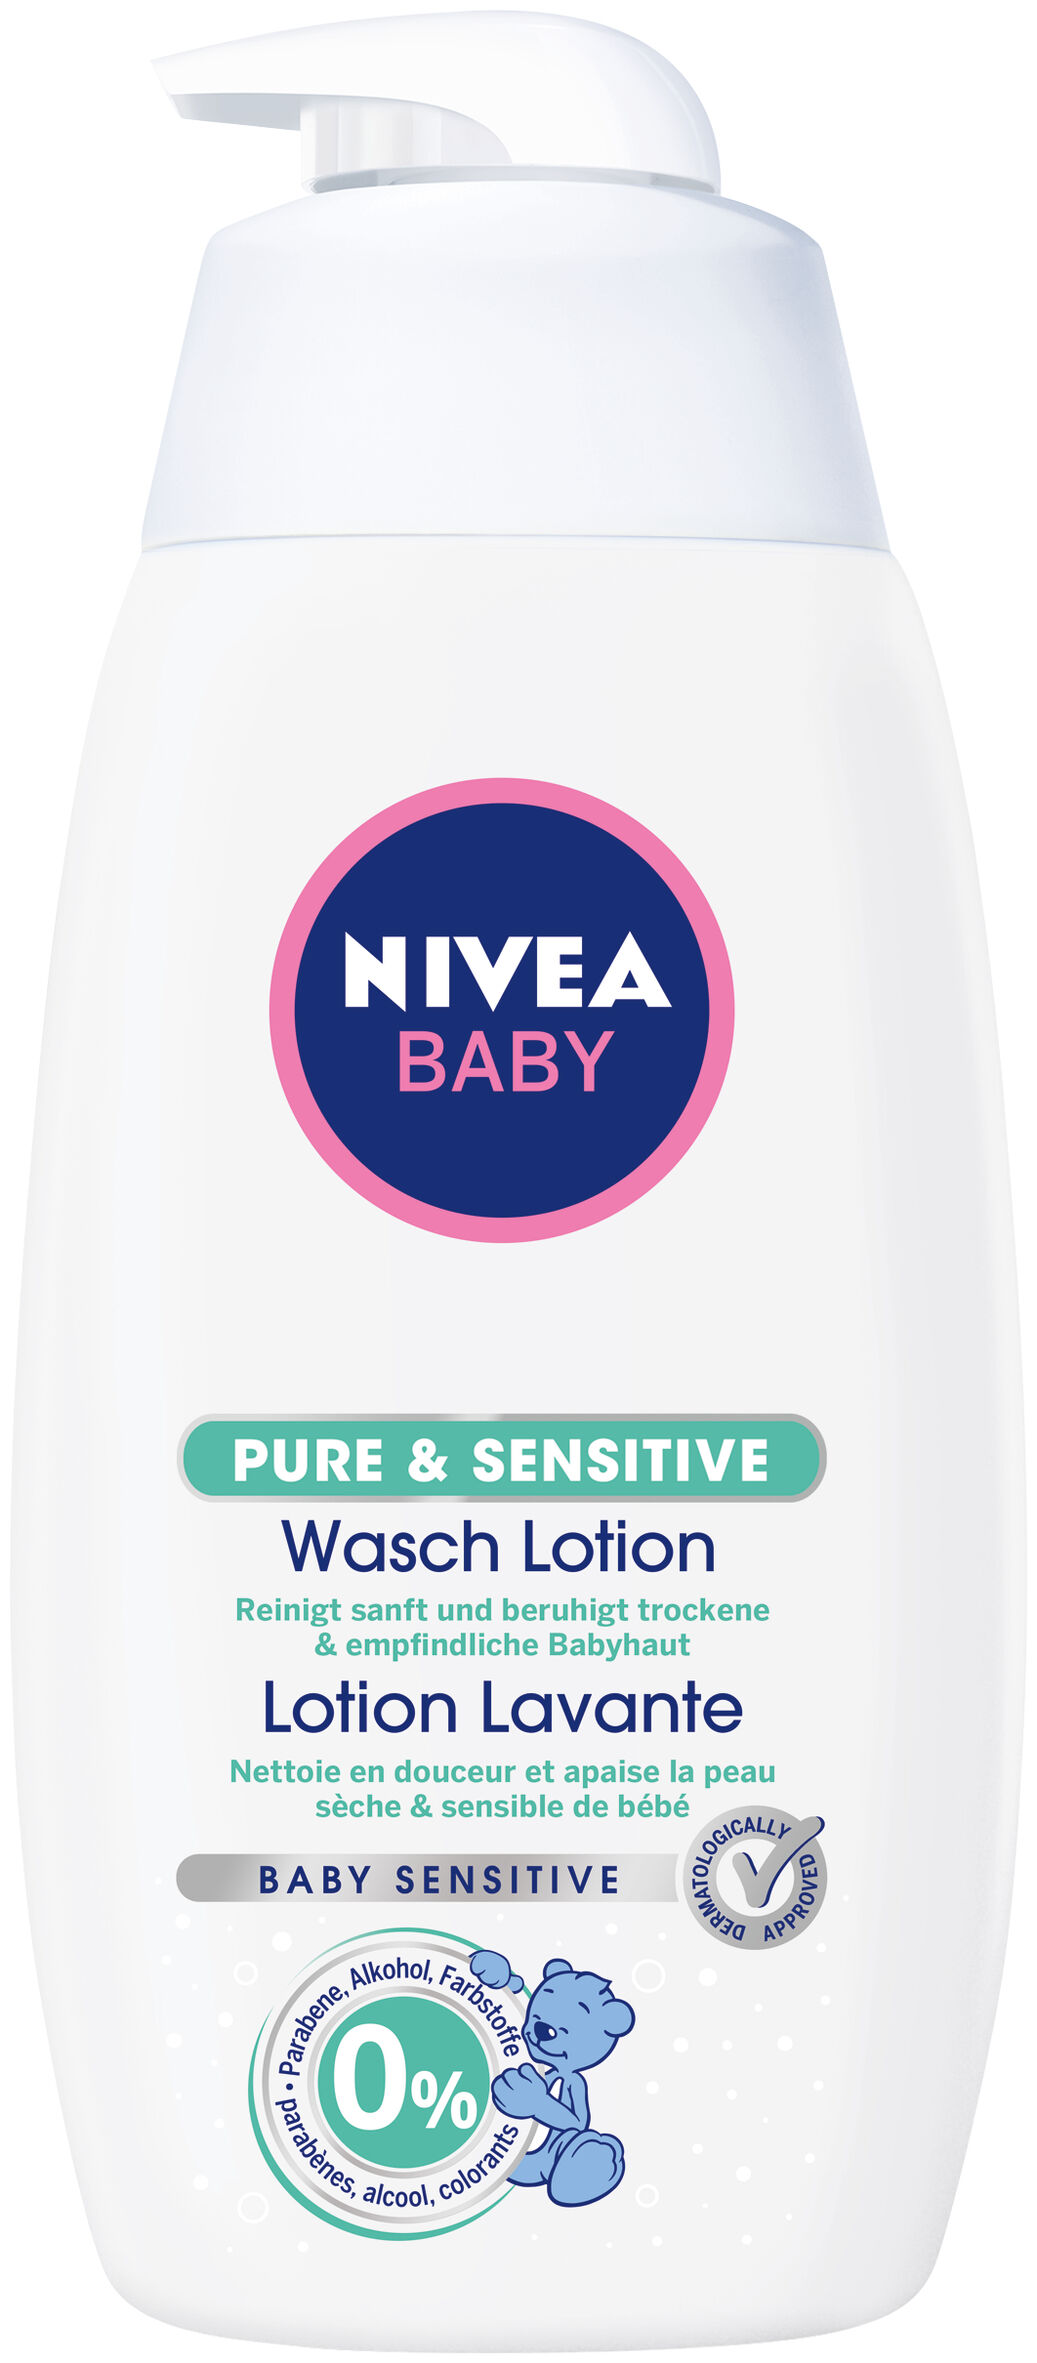 Nivea Baby Pure & Sensitive Wasch Lotion 500 ml acquistare online